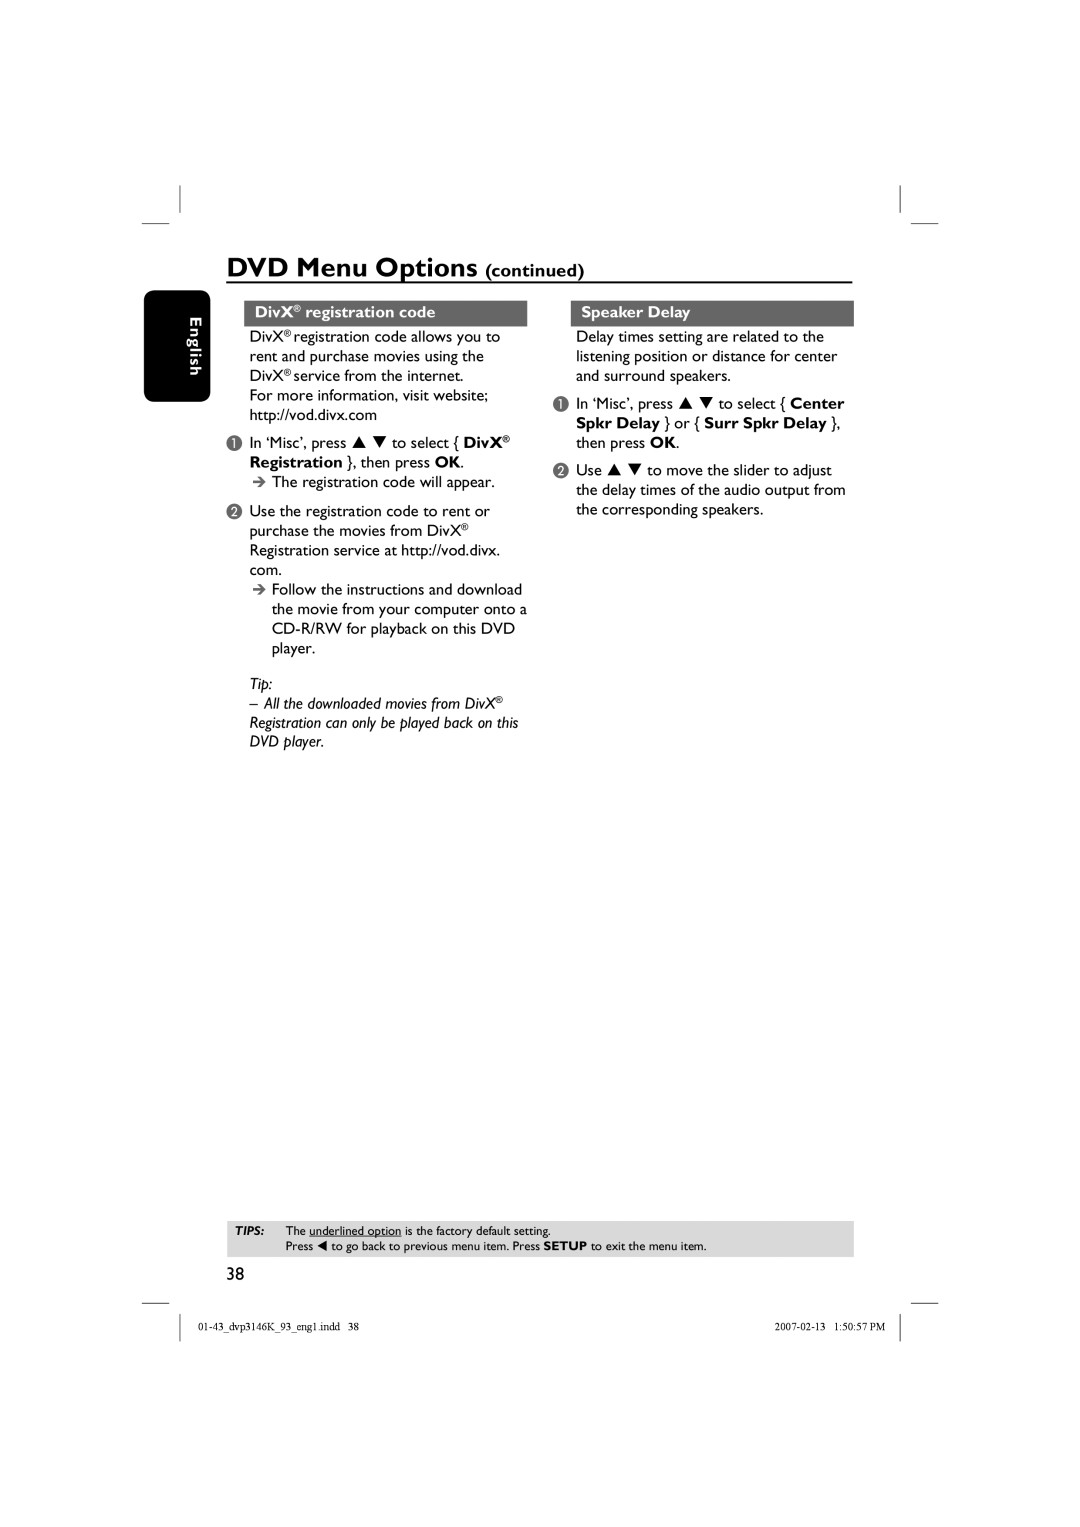 Philips DVP3146K/93 user manual DivX registration code, Speaker Delay, DVD Menu Options continued, English 